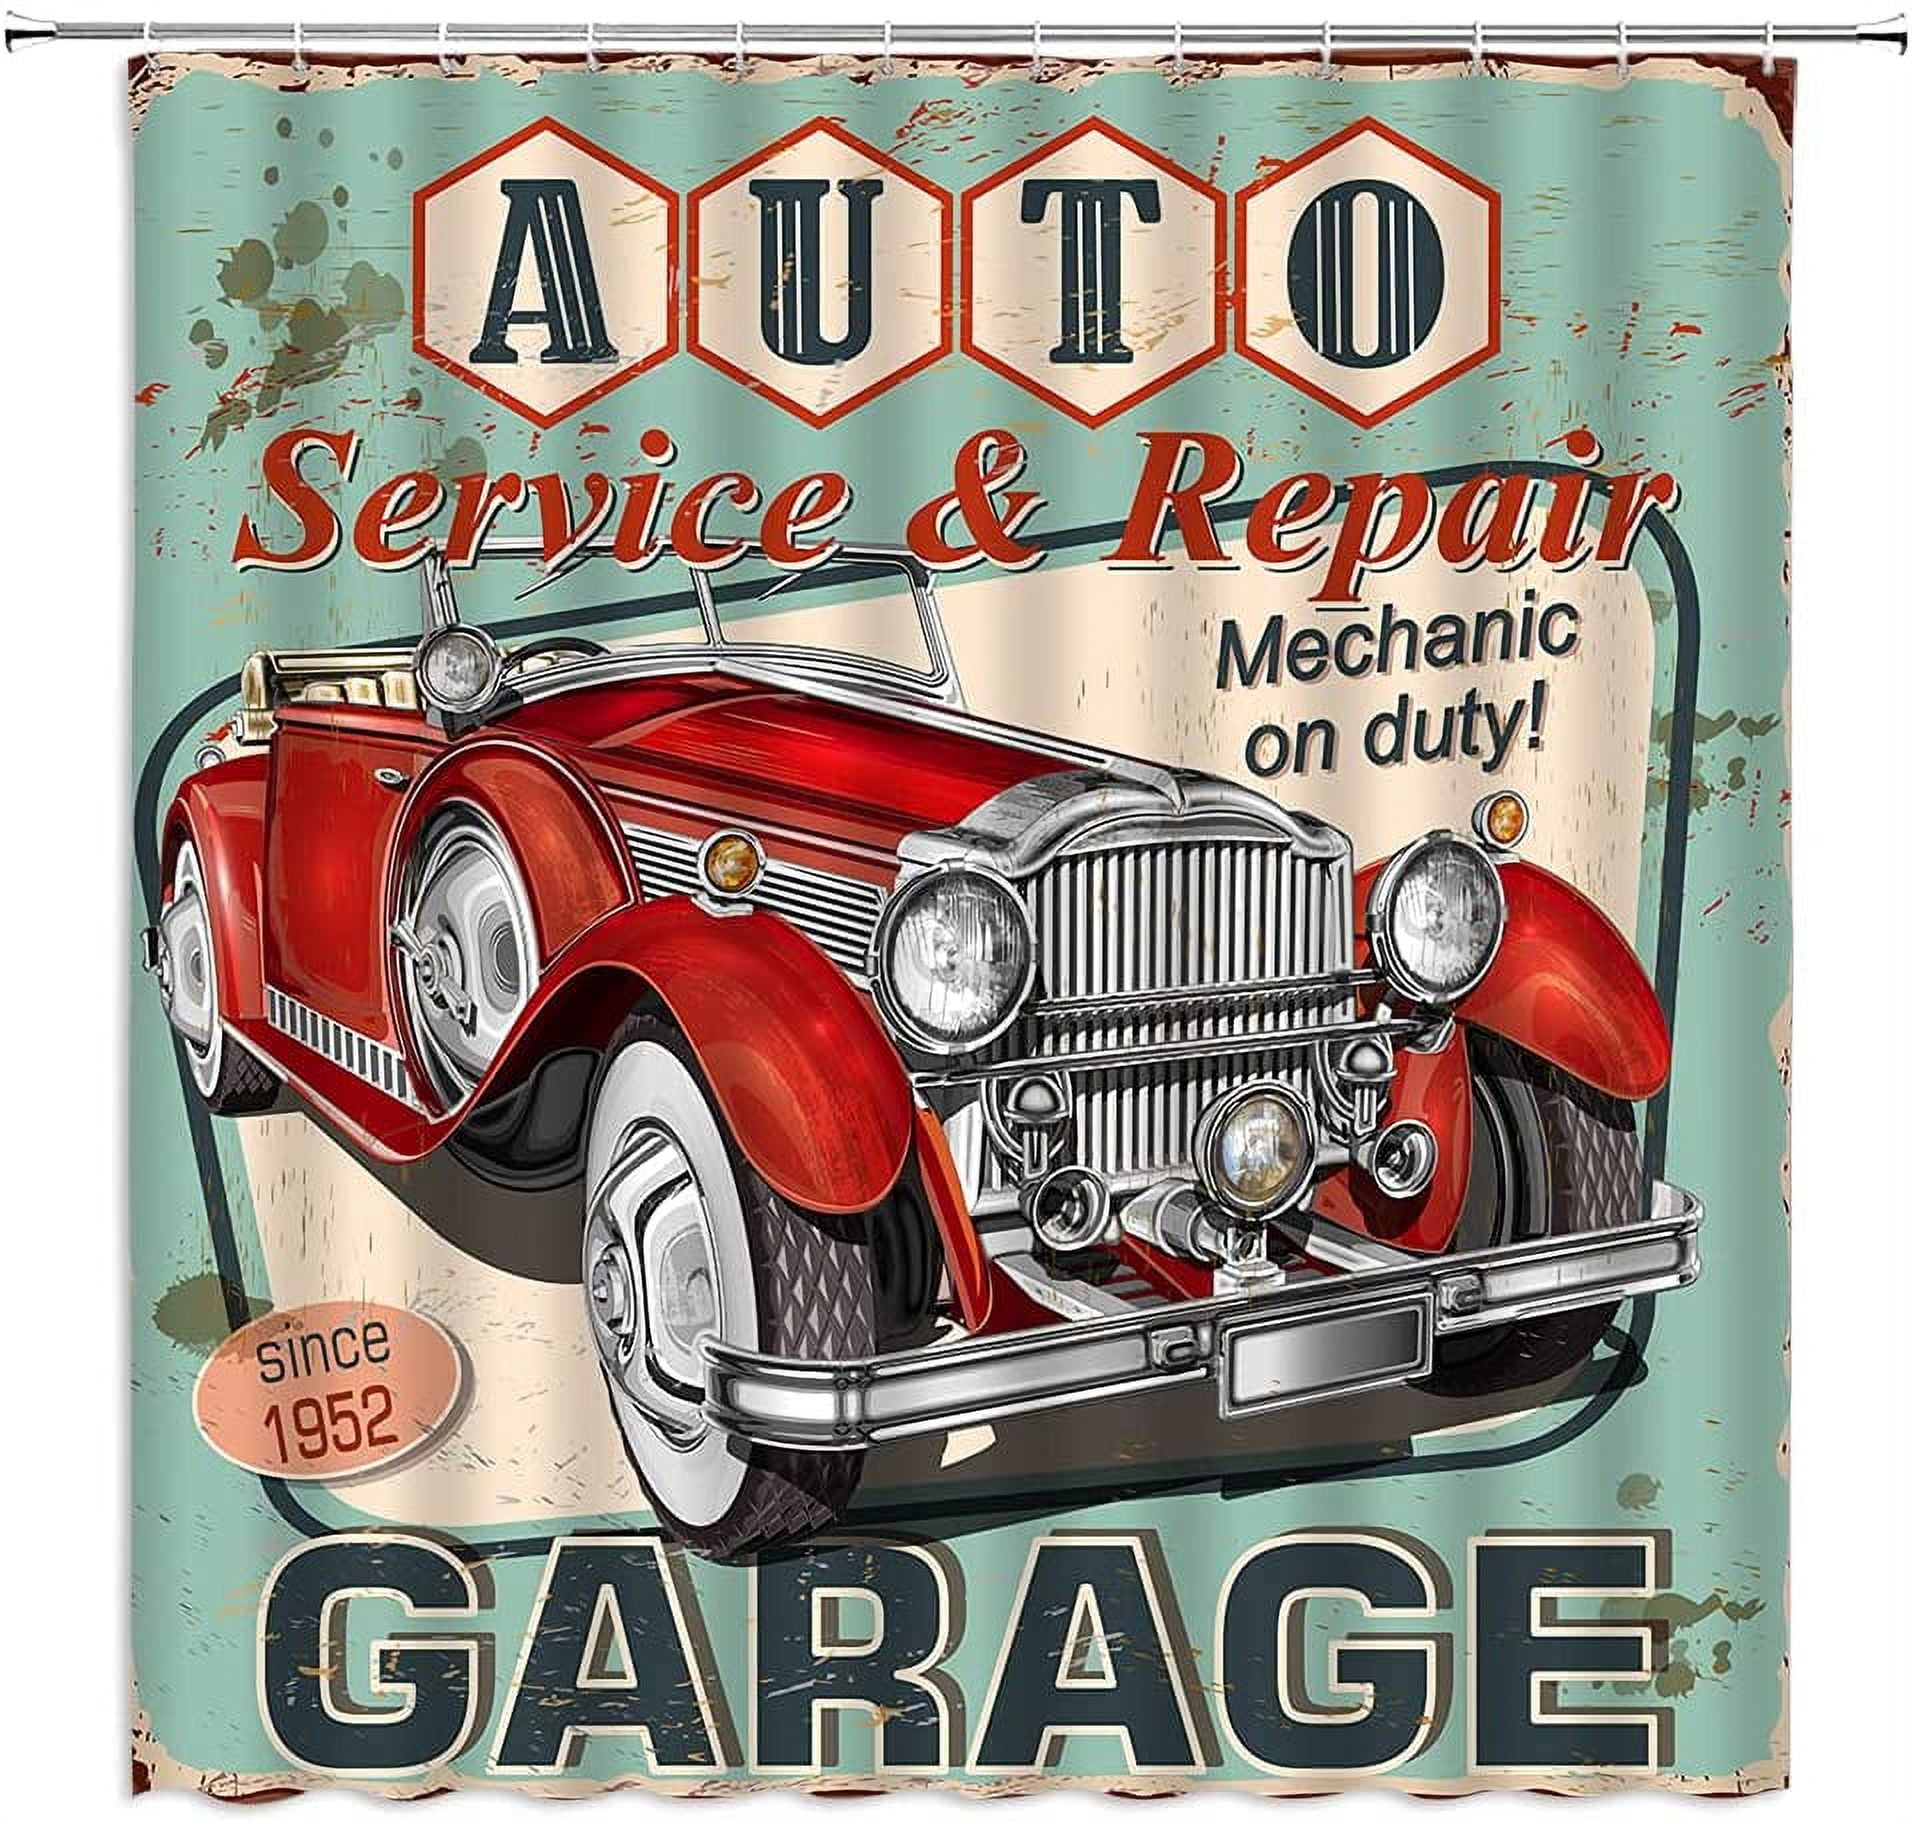 Retro Rug, Root 66 Garage Service Repair Retro Rug, Old American